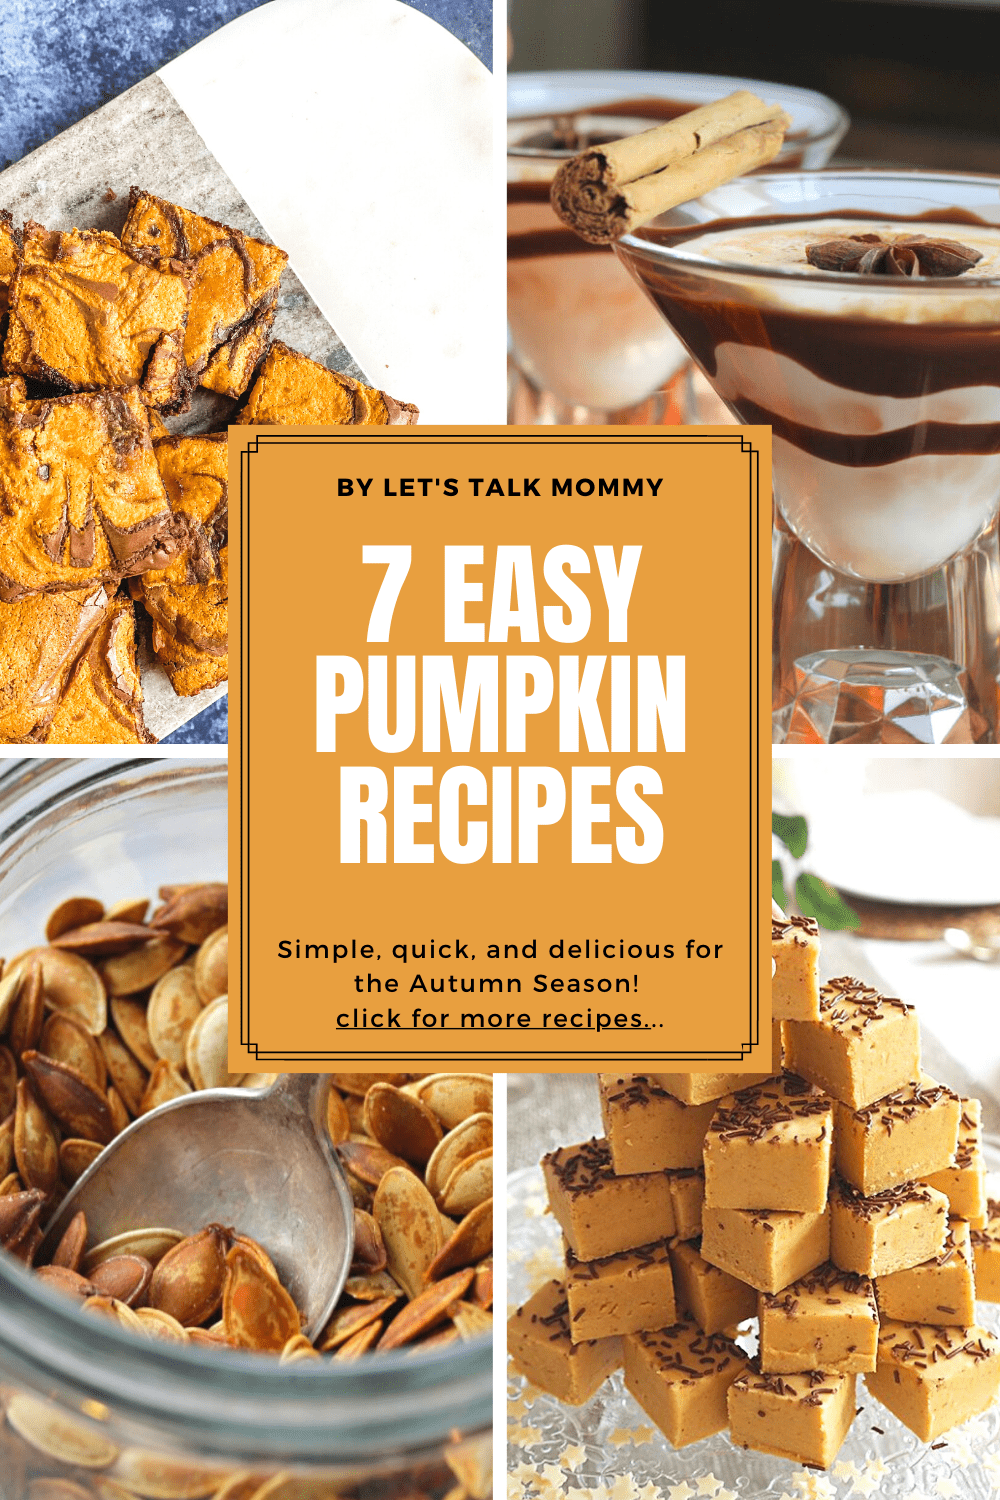 7 easy pumpkin recipes uk by Let's talk mommy